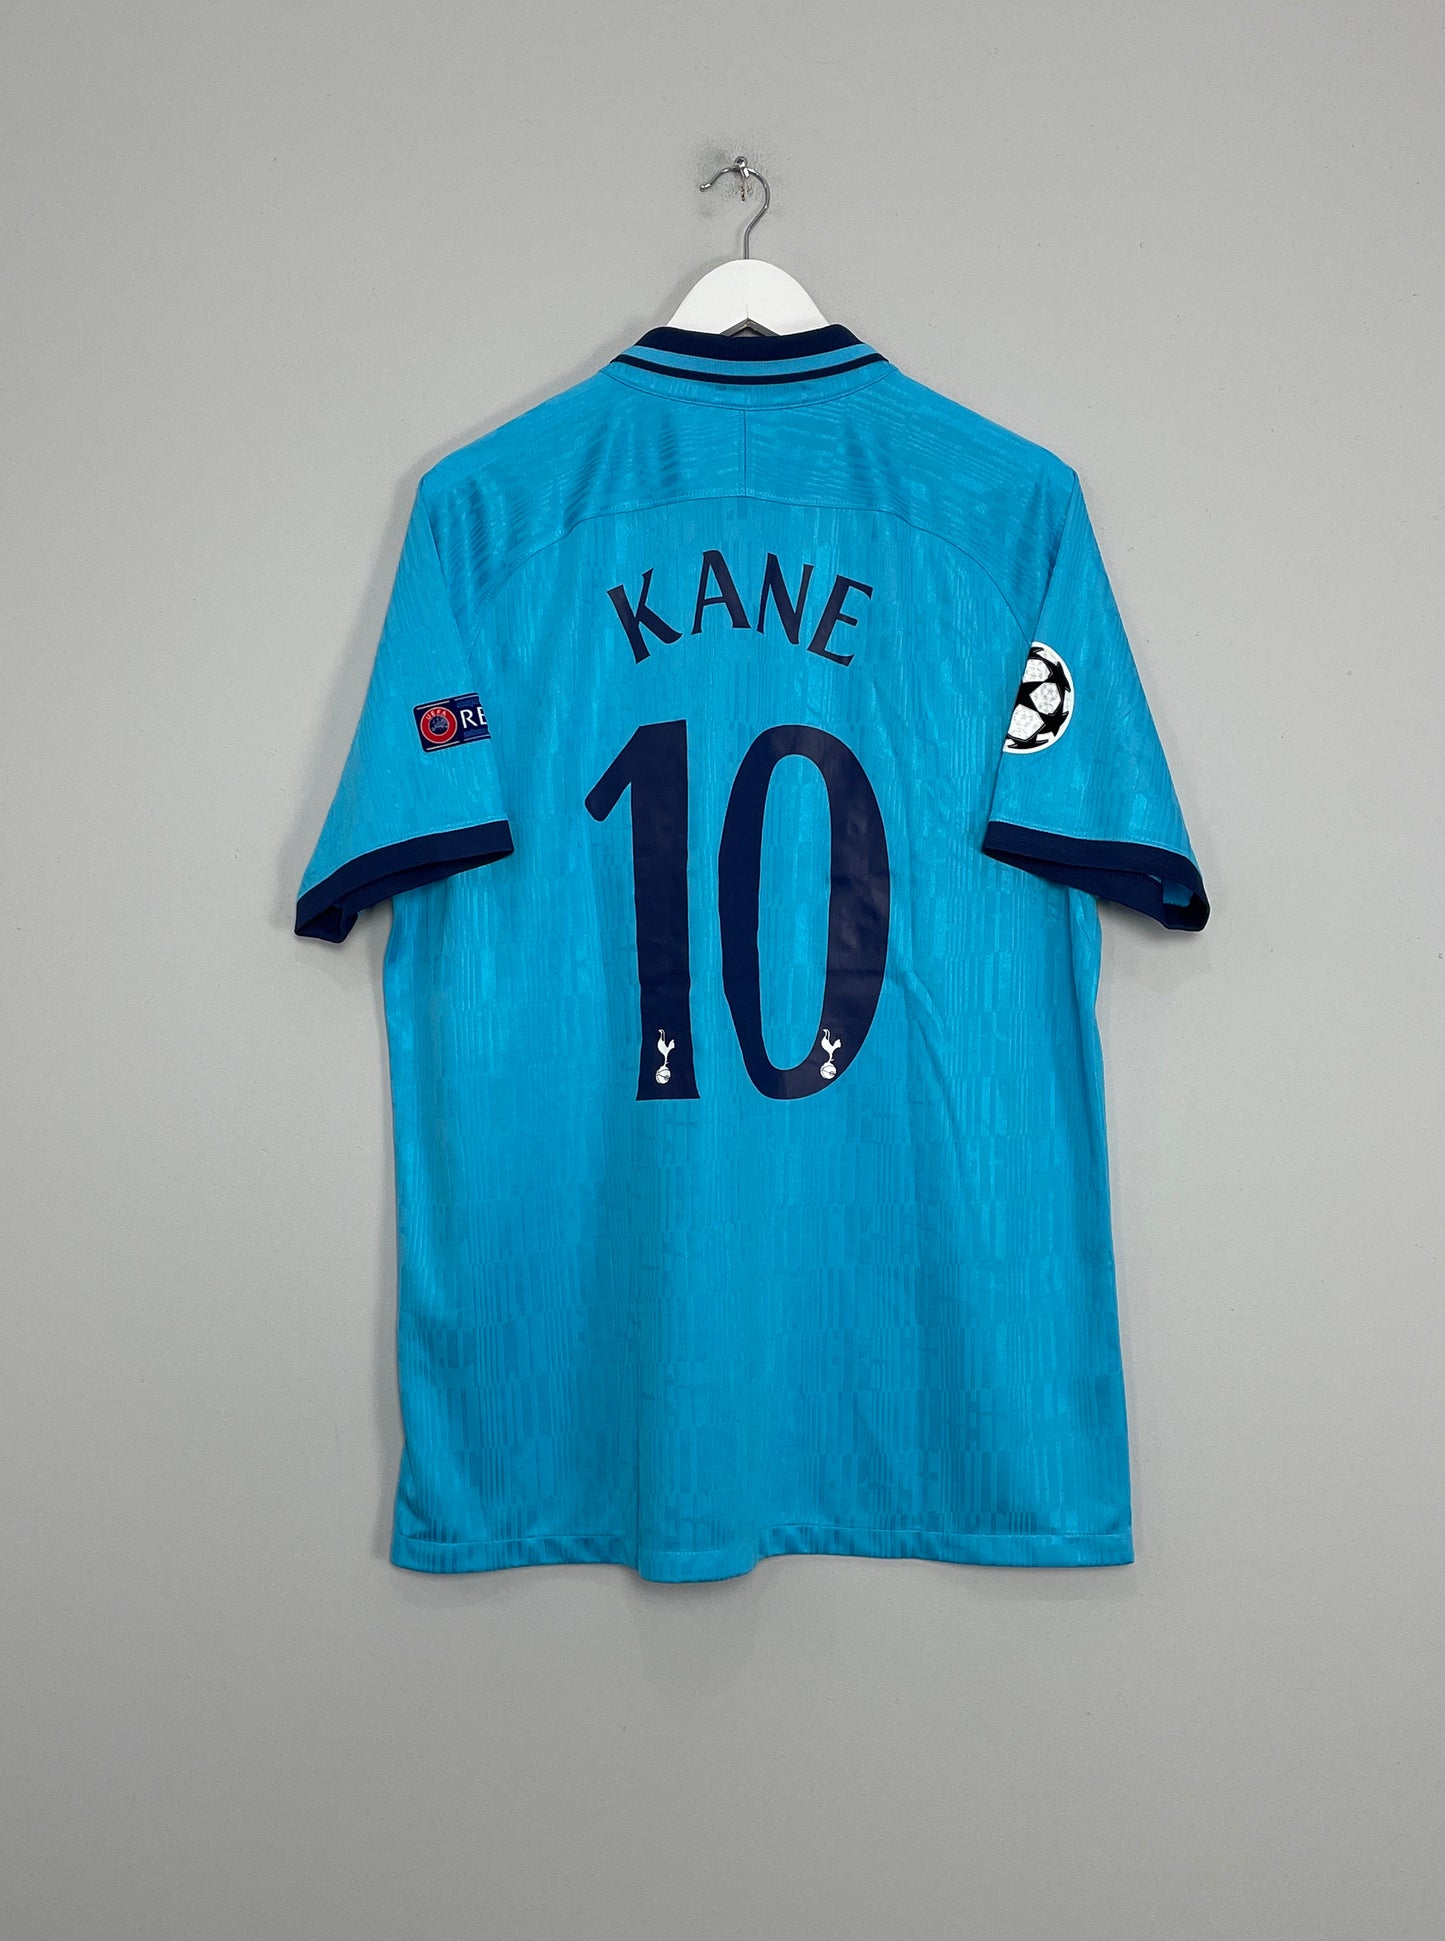 Image of the Tottenham Kane shirt from the 2019/20 season